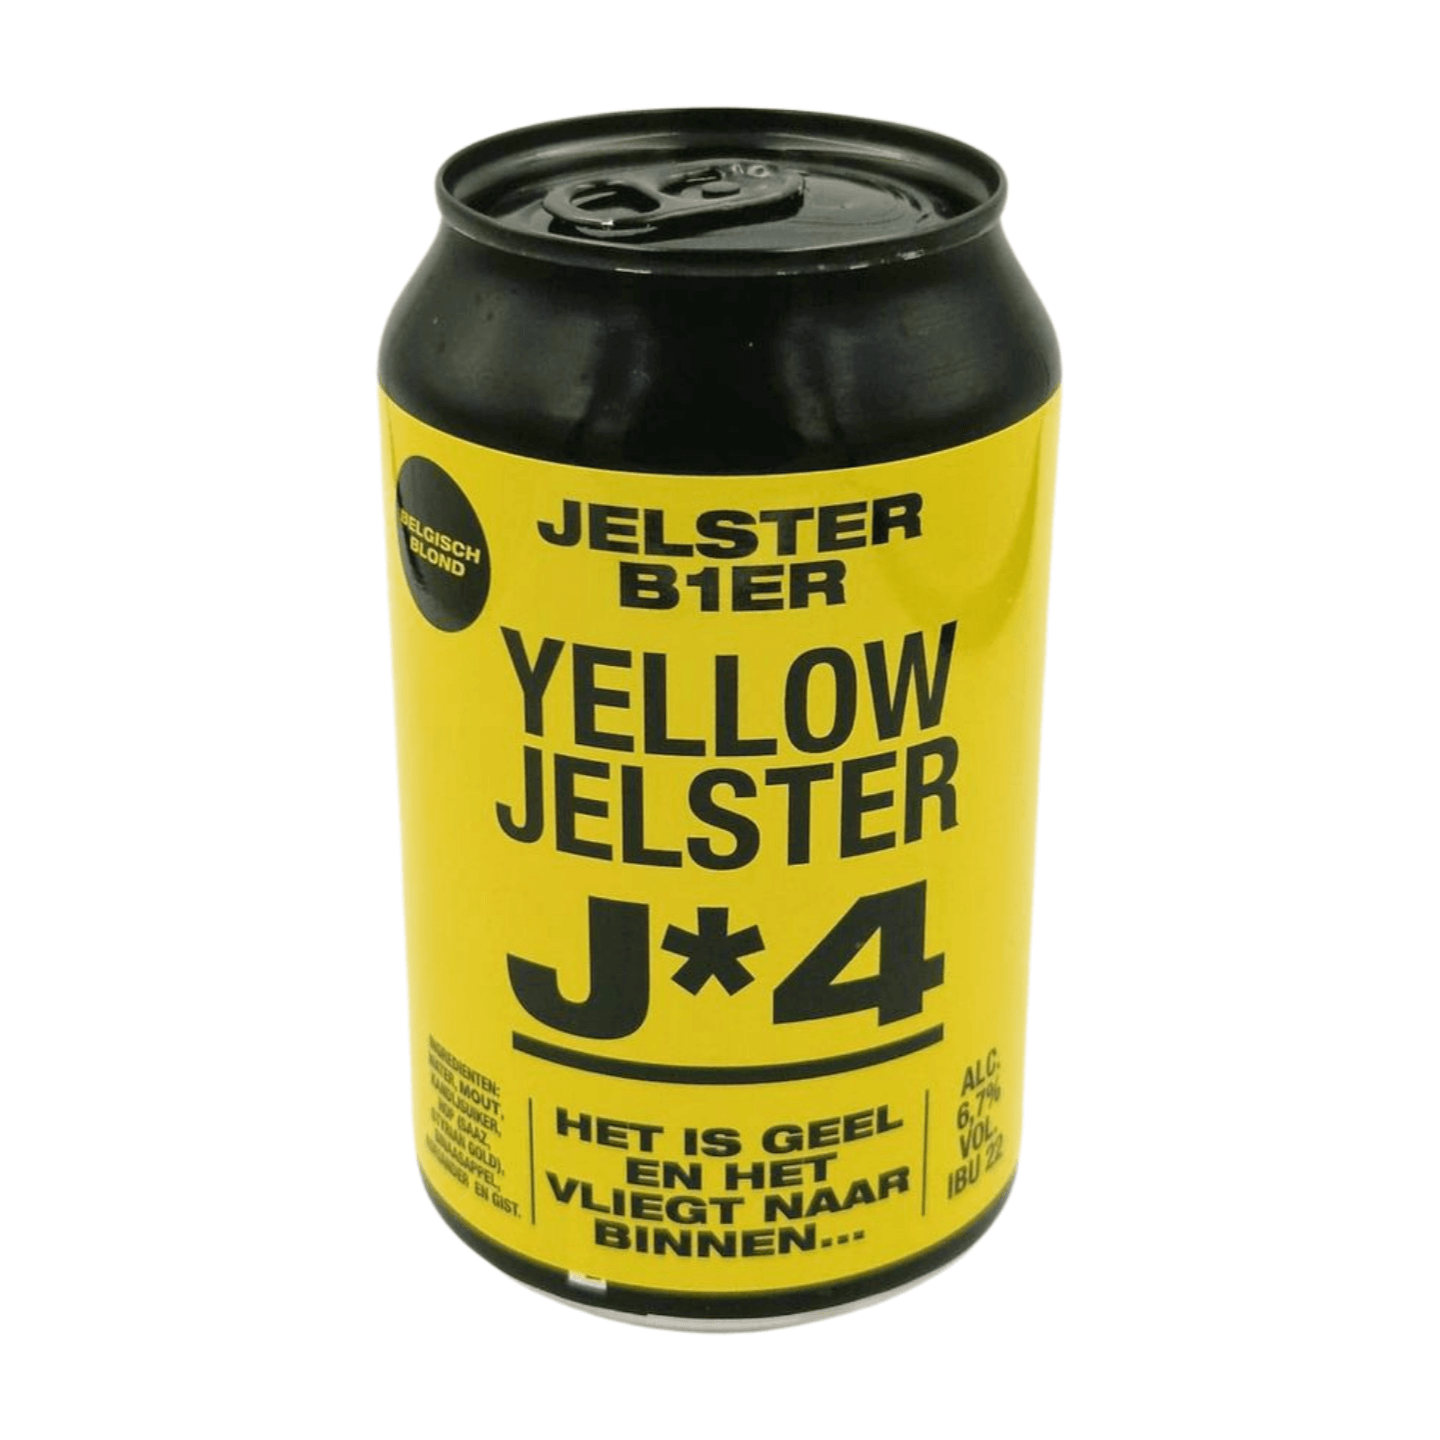 Jelster Yellow | Blond Webshop Online Verdins Bierwinkel Rotterdam